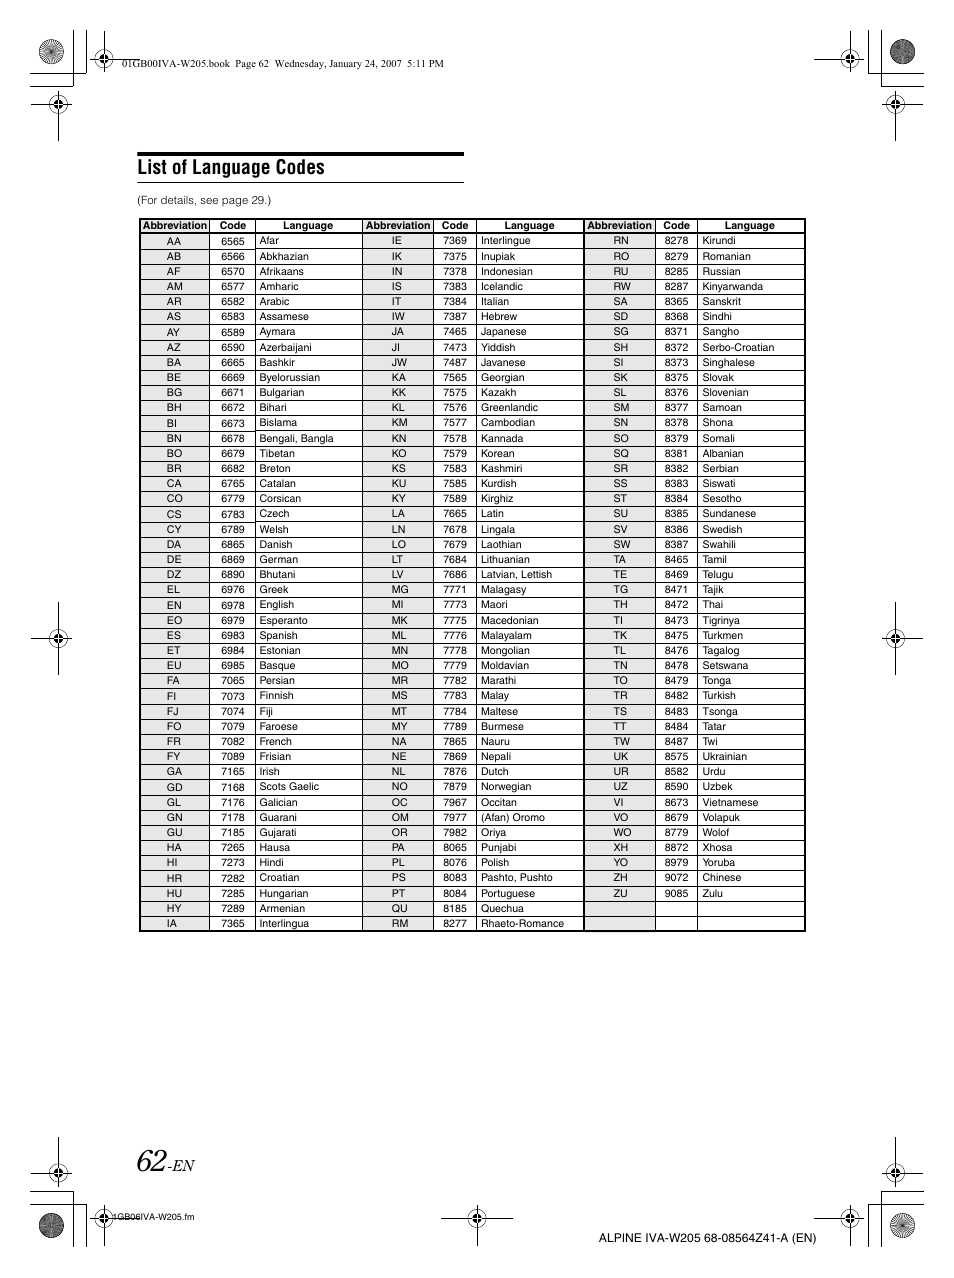 List of language codes | Alpine IVA-W205 User Manual | Page 64 / 238